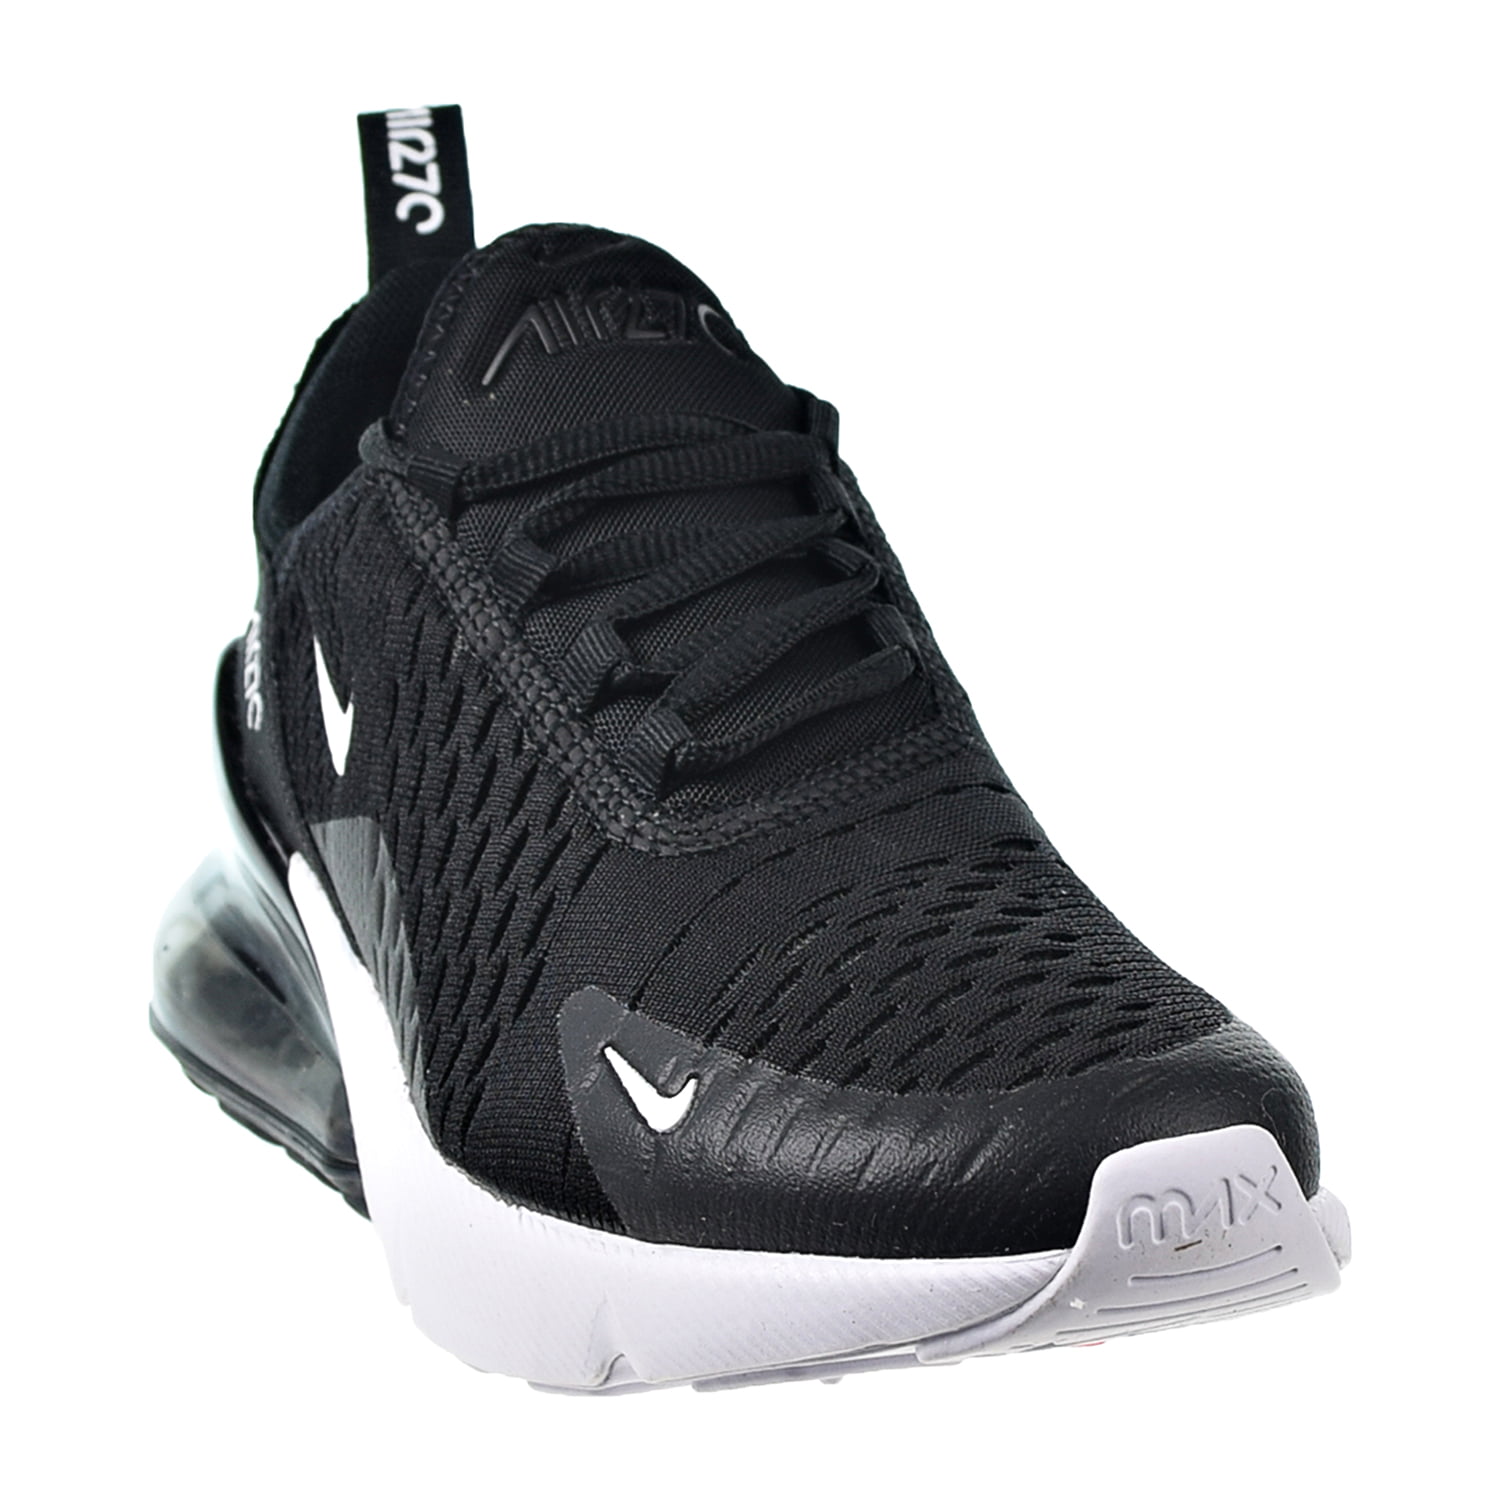  Nike Big Kid's Air Max 270 Black/White-Bright Spruce (943345  026) - 4.5